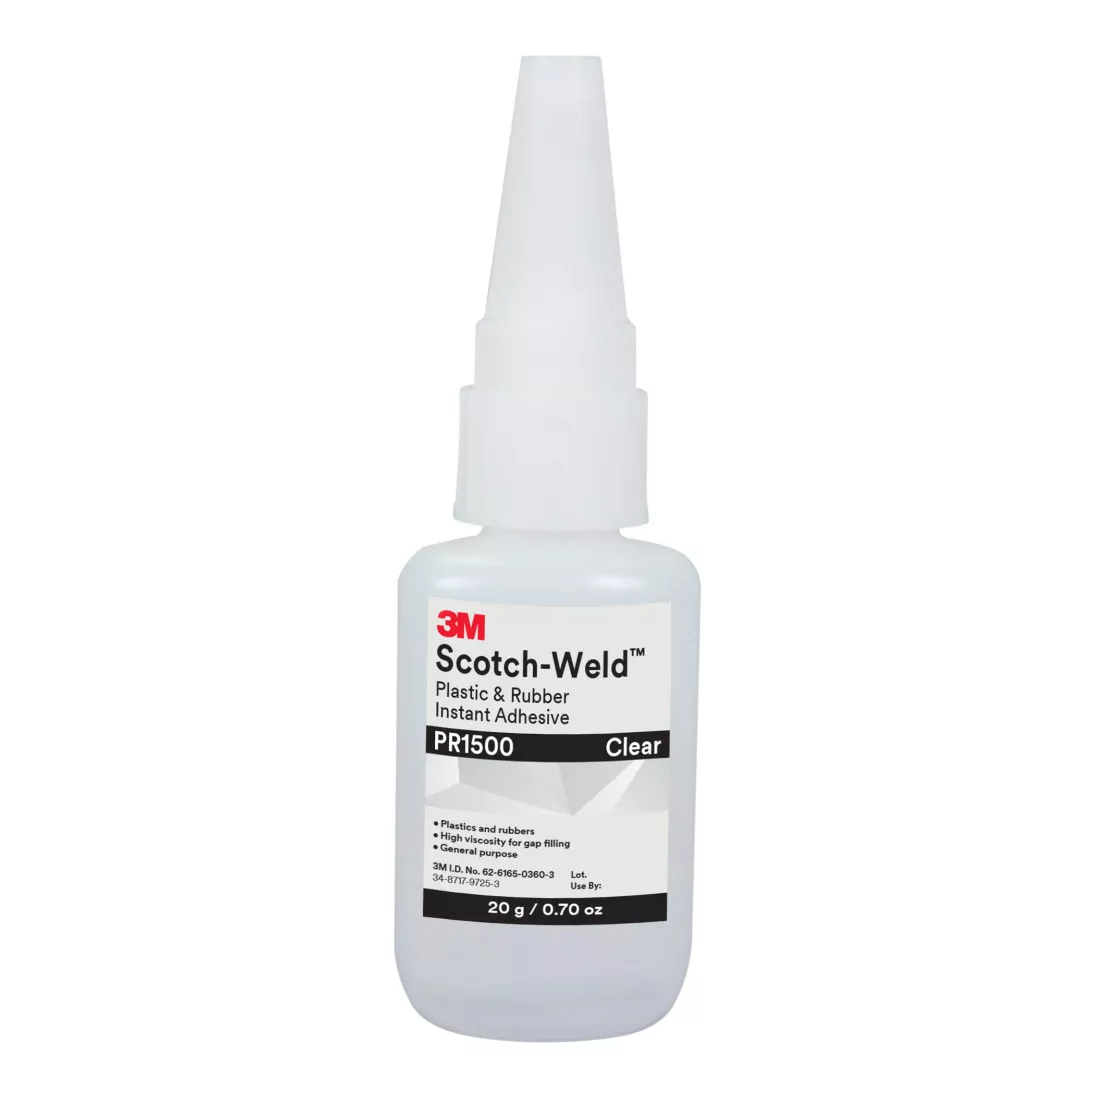 3M™ Scotch-Weld™ Plastic & Rubber Instant Adhesive PR1500, Clear, 20
Gram Bottle, 10/case